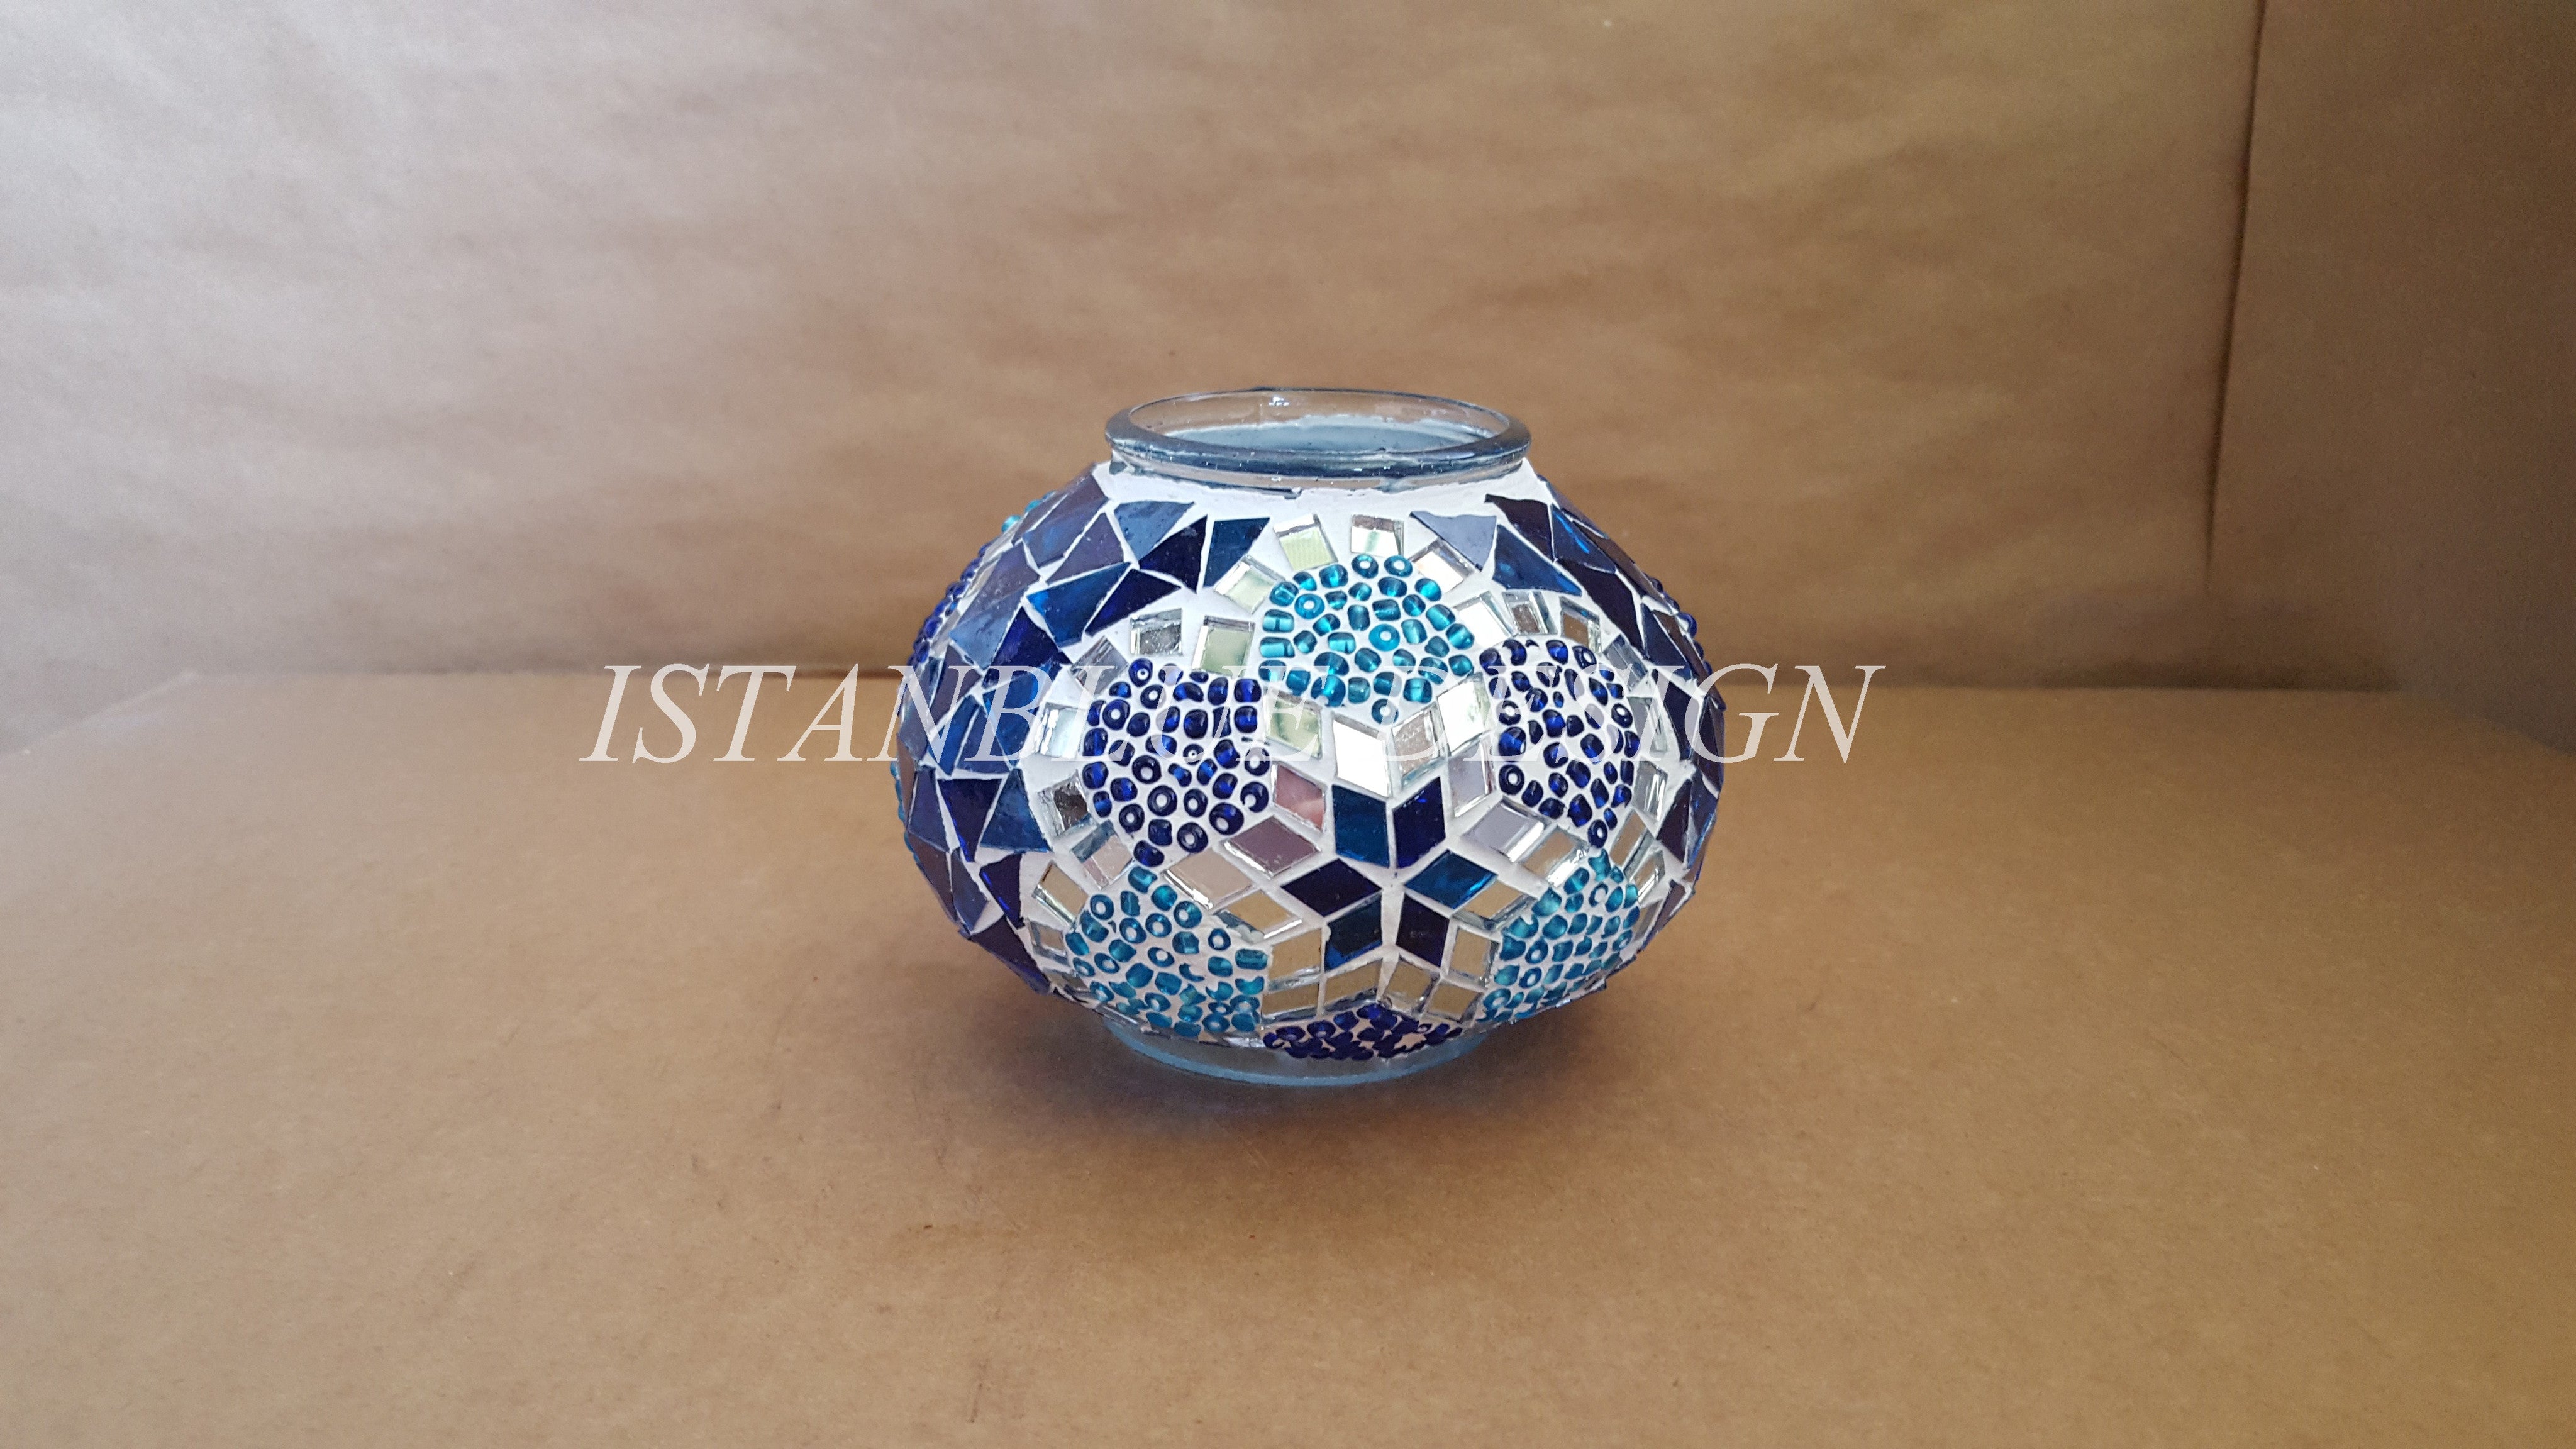 Turkish Handmade Mosaic 3 Arms Floor Lamp